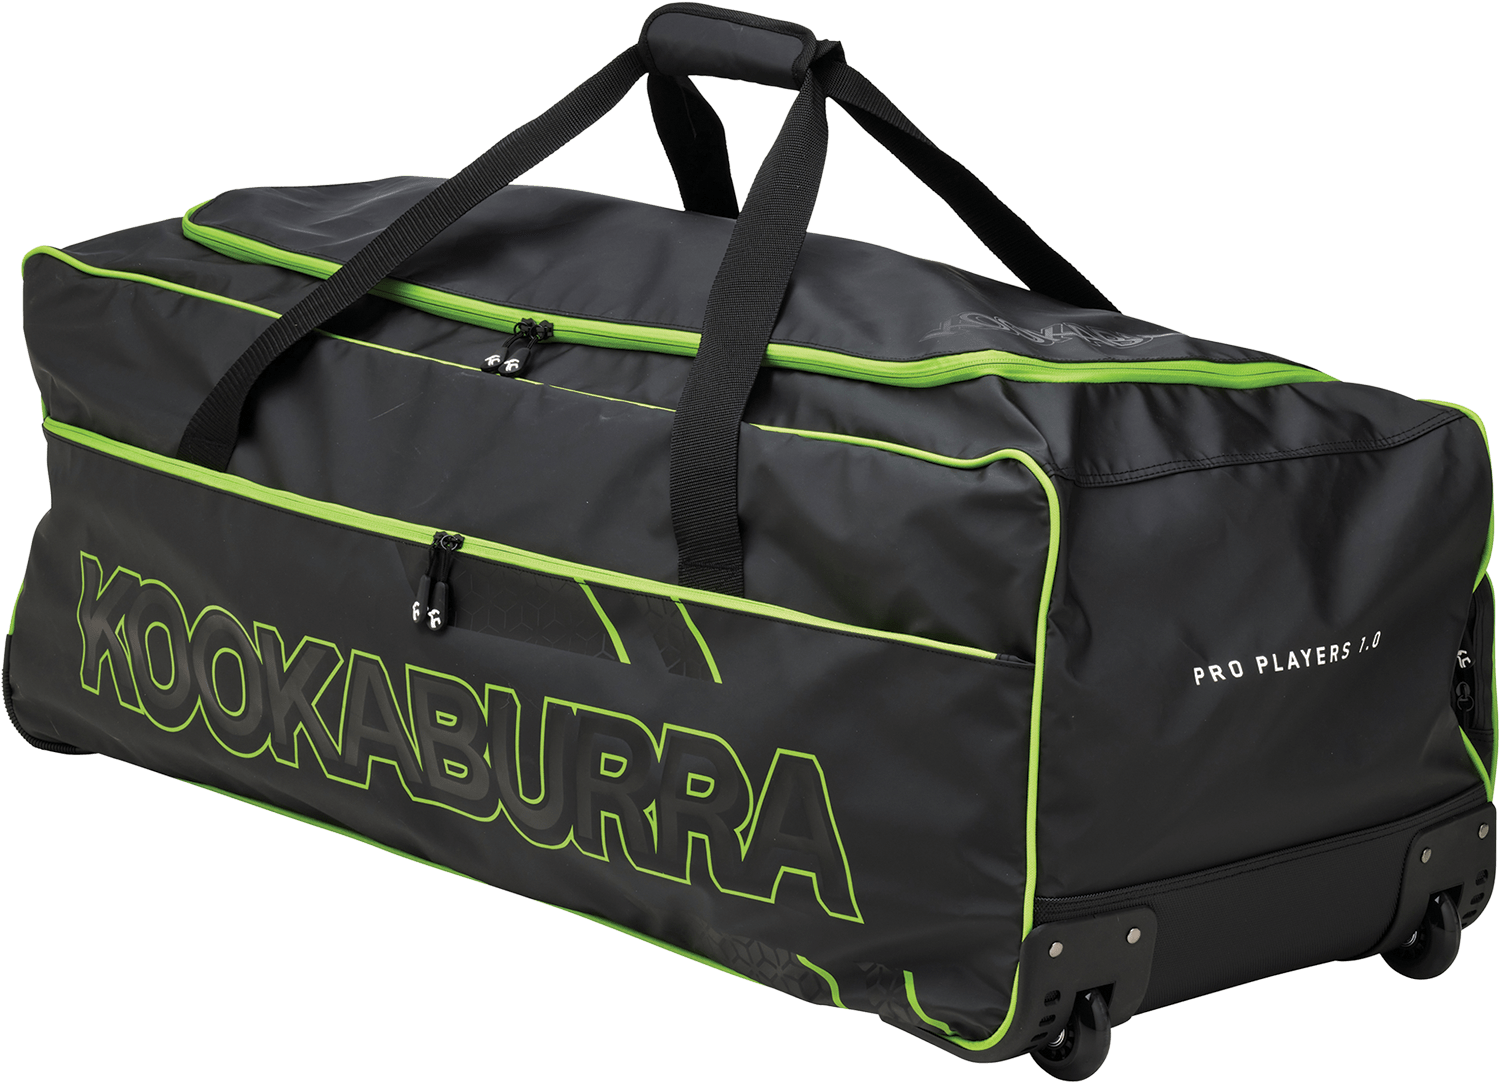 Kookaburra Cricket Bags Kookaburra Pro Players 1.0 Wheelie Cricket Kit Bag